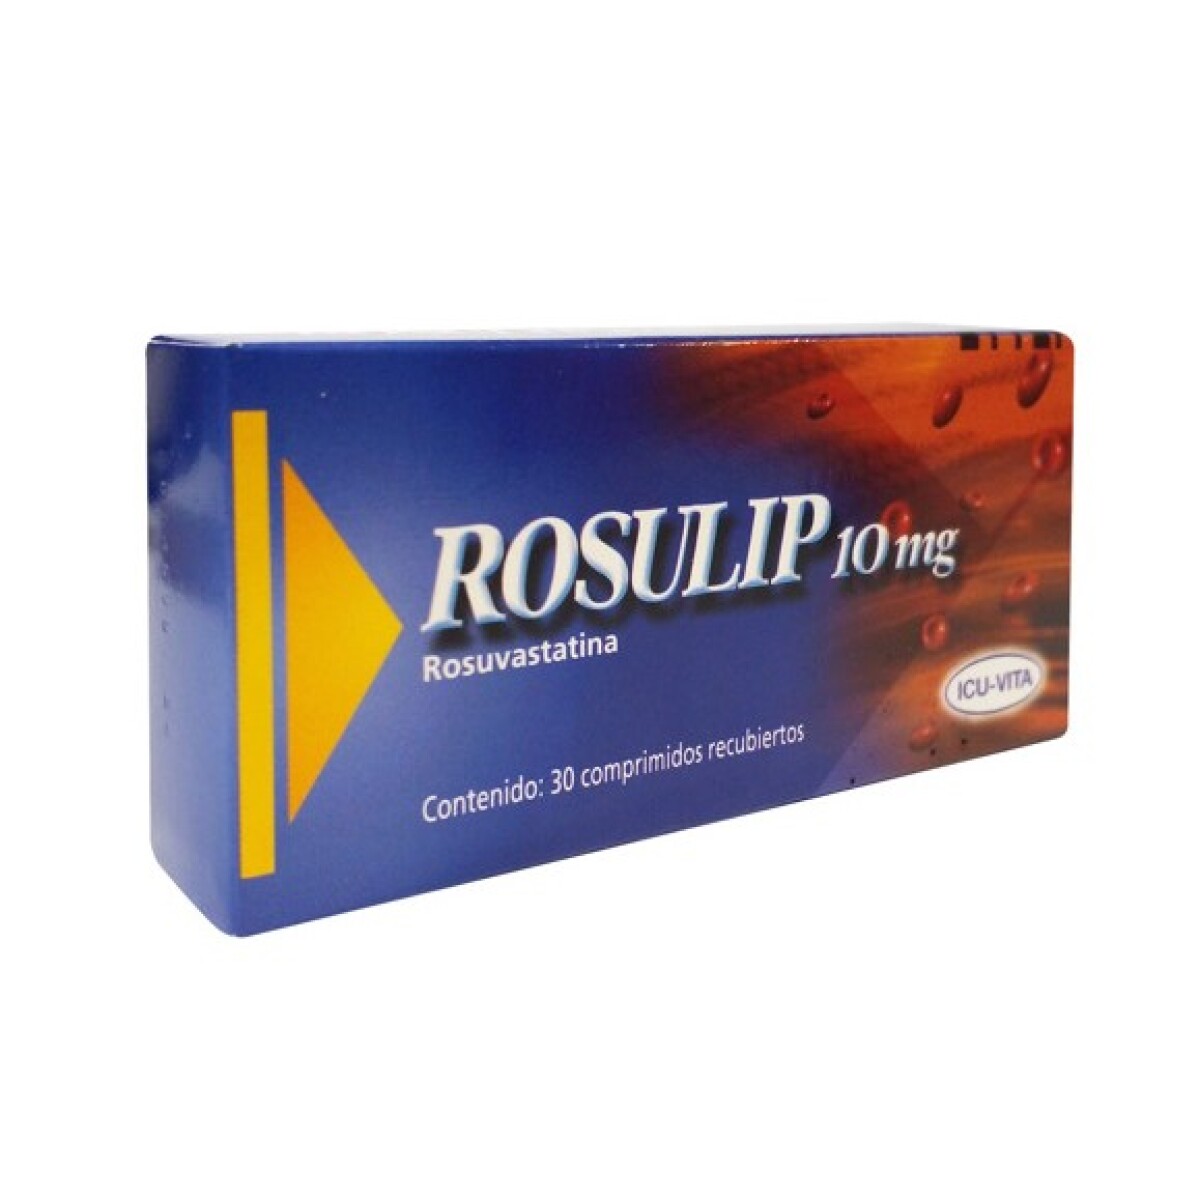 Rosulip 10mg x 30 COM 